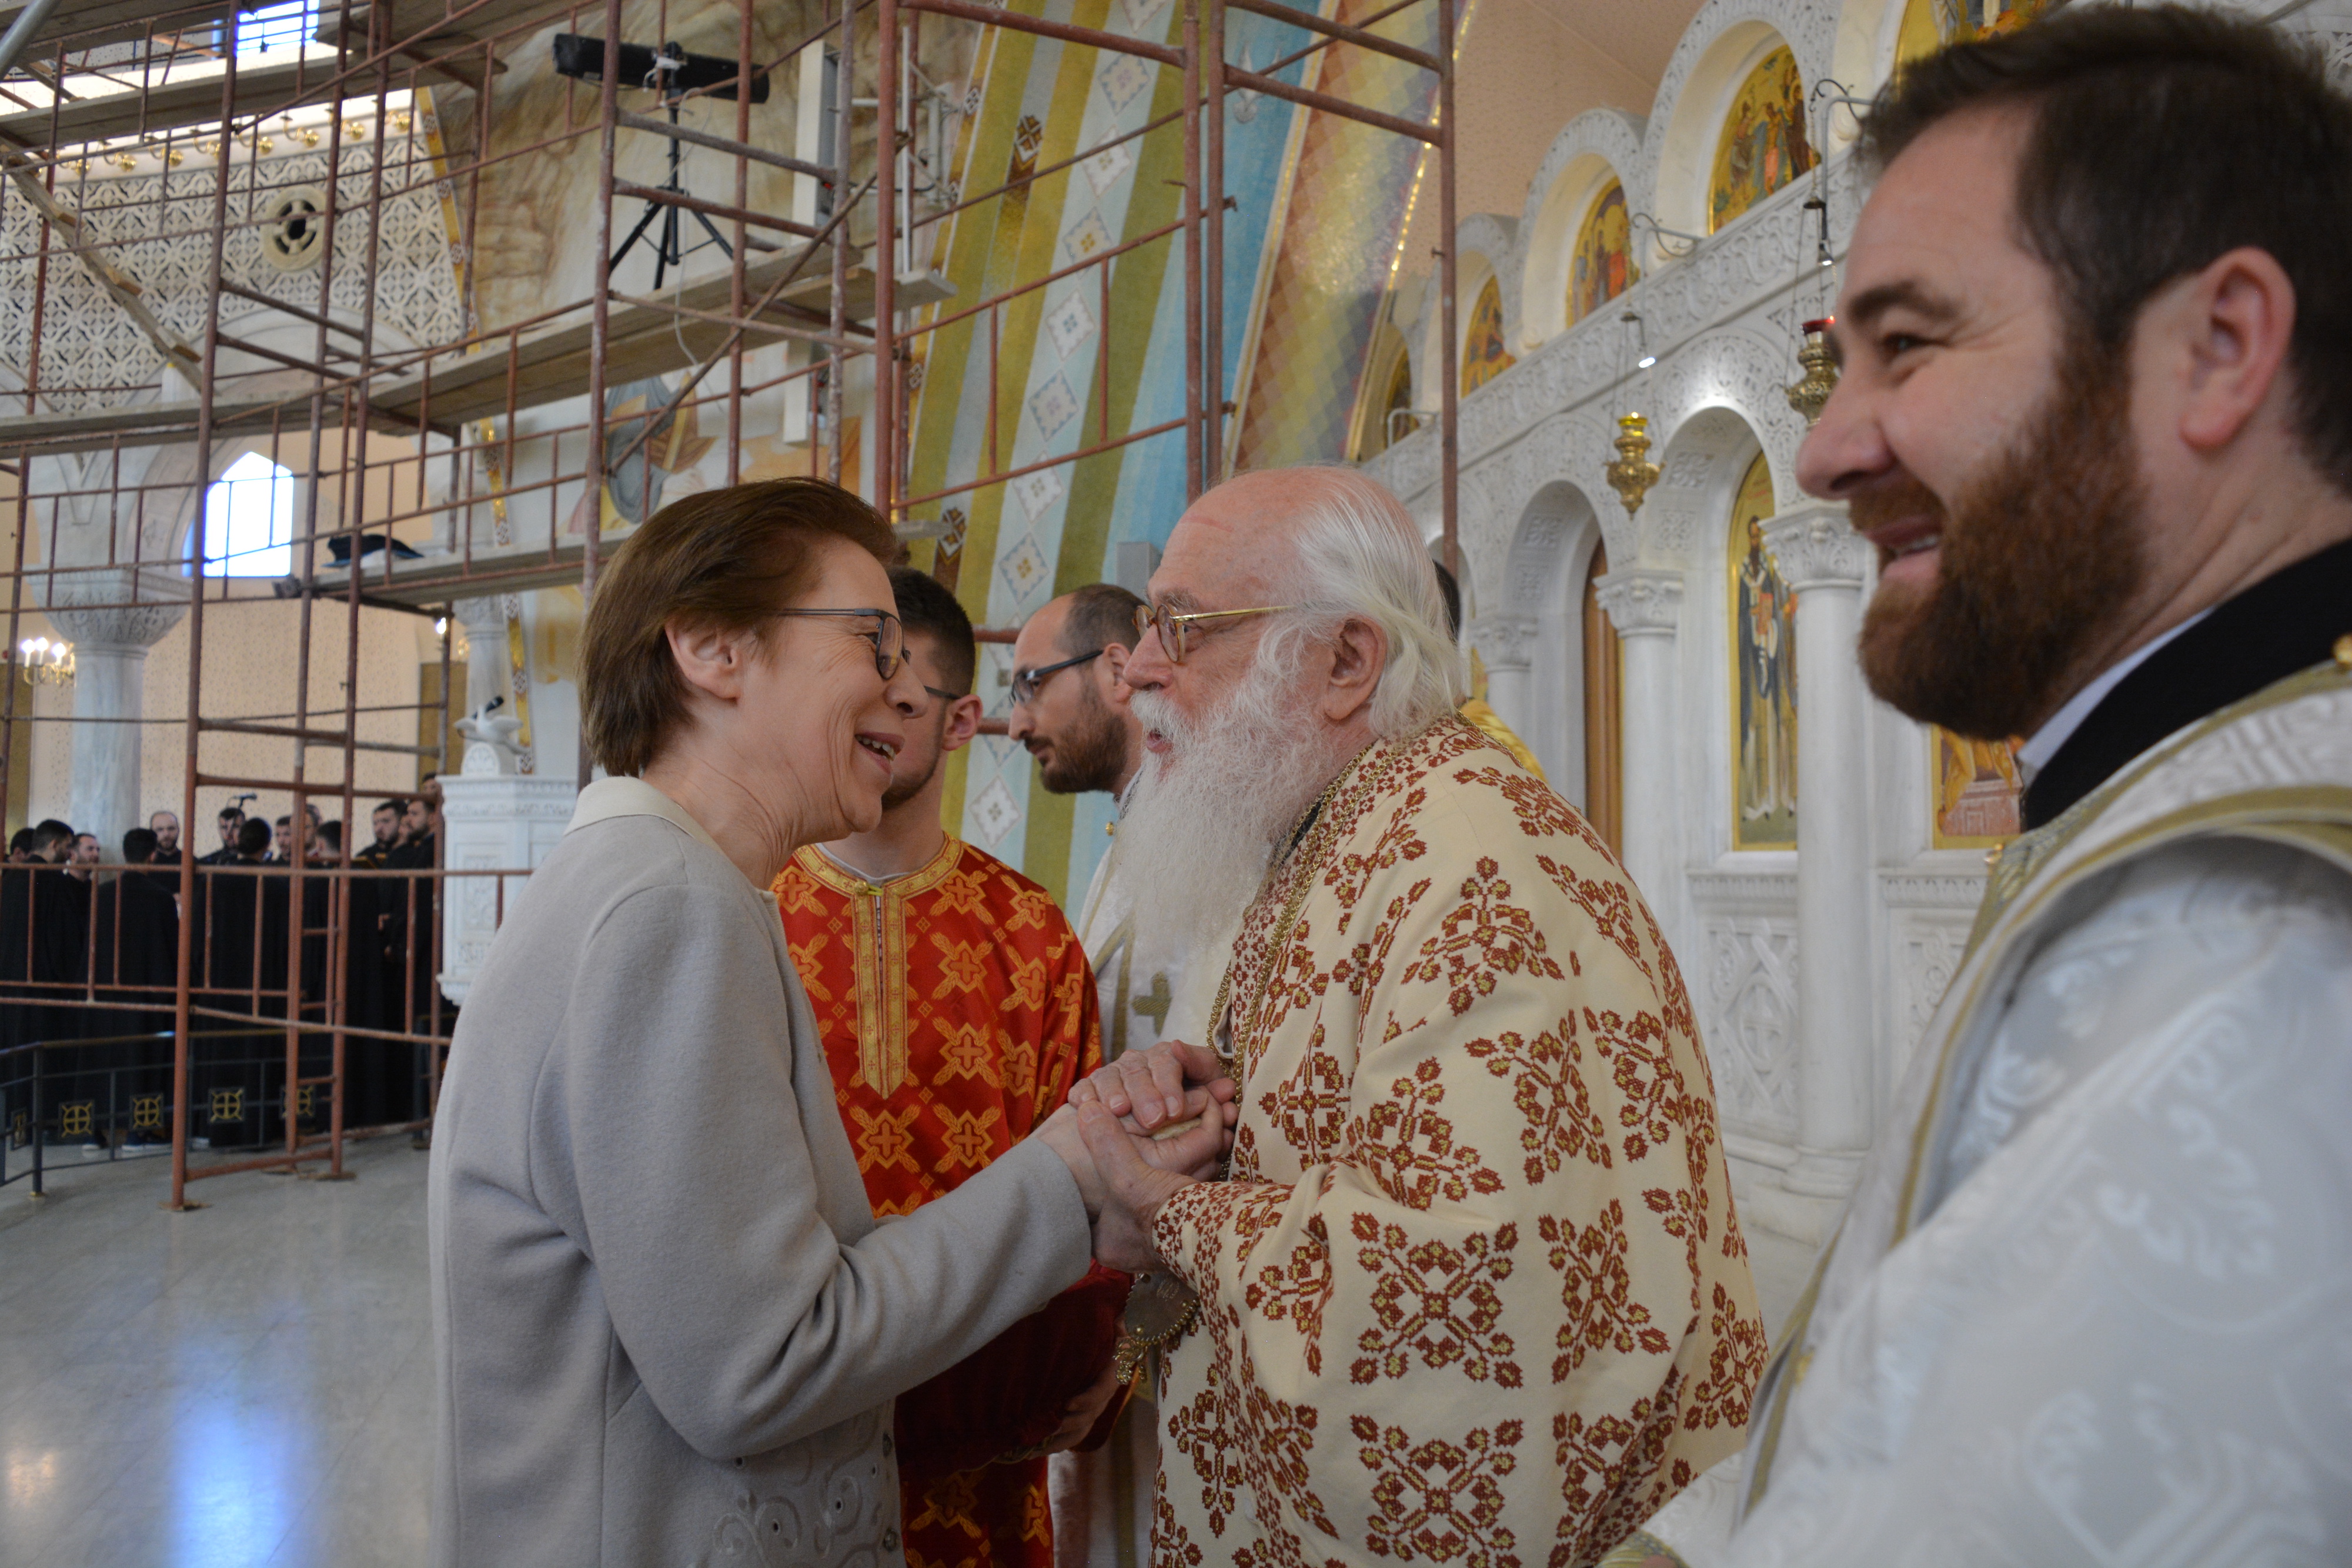 First warm greeting by Archbishop Anastasios